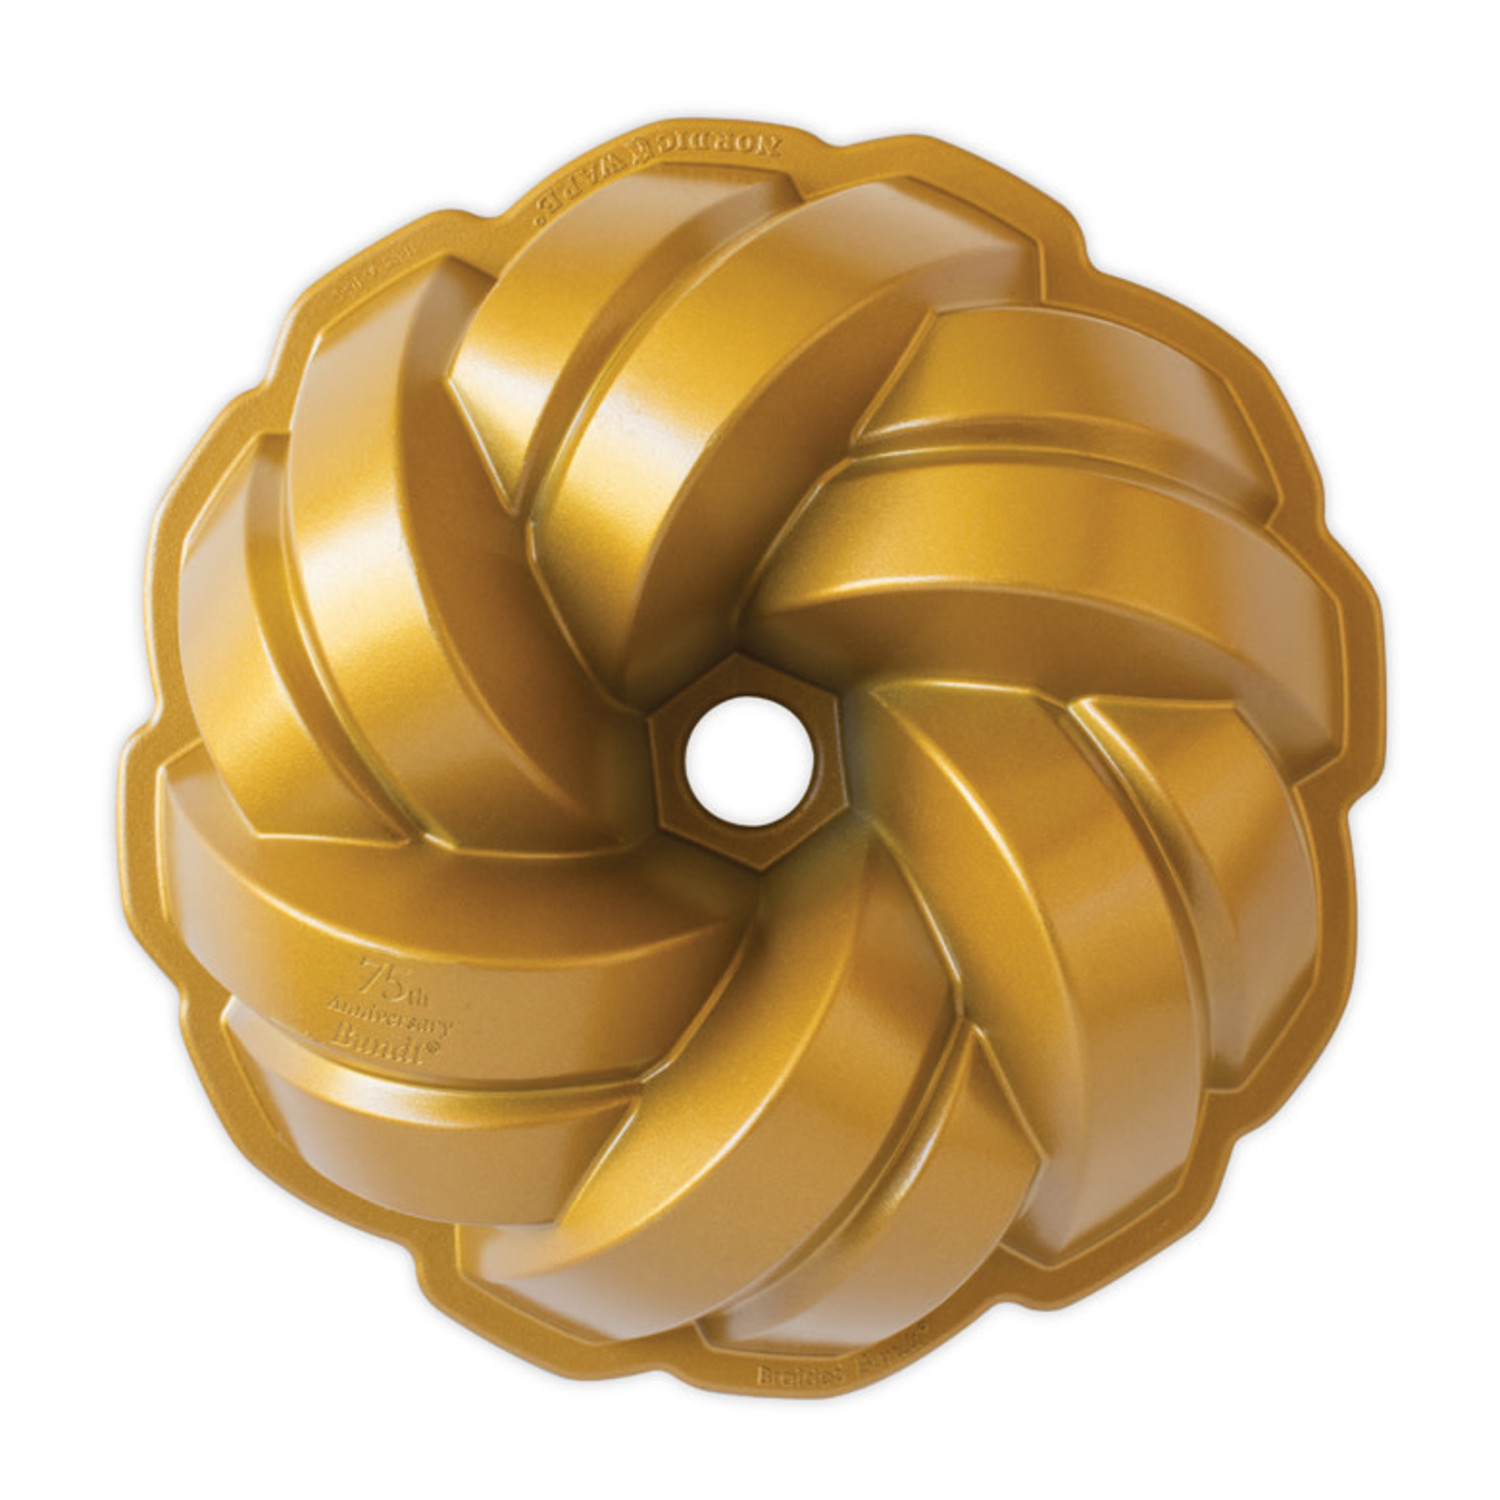 Nordic Ware Jubilee Bundt Pan (Gold)